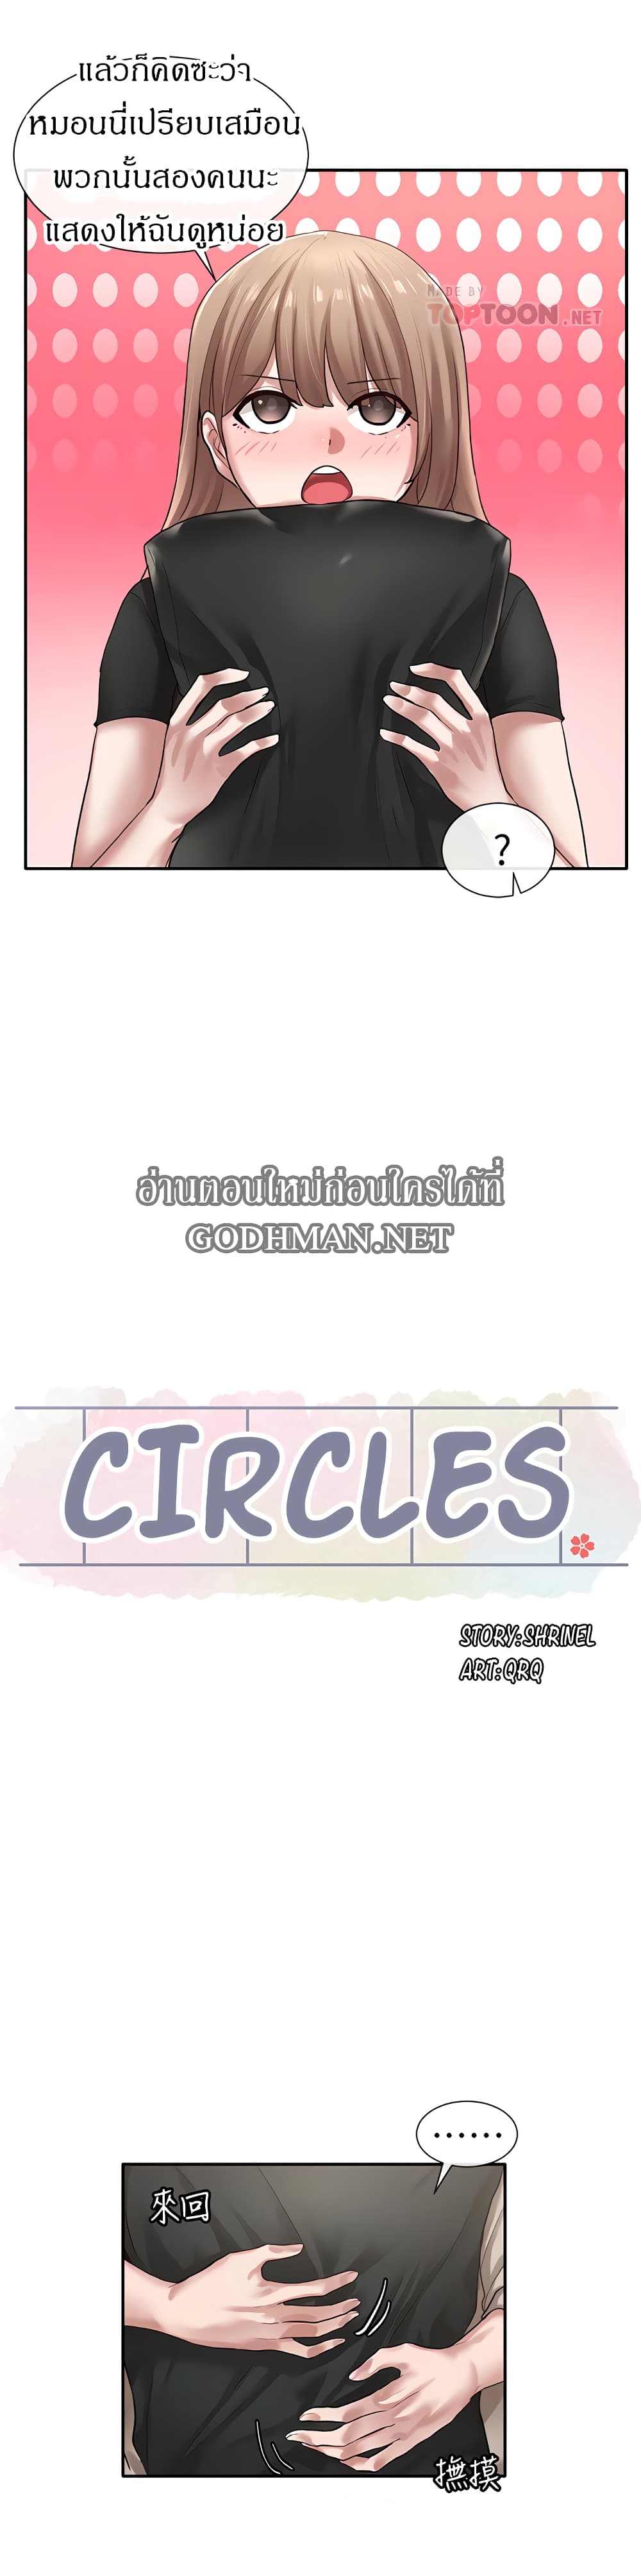 Theater Society (Circles) 33-33